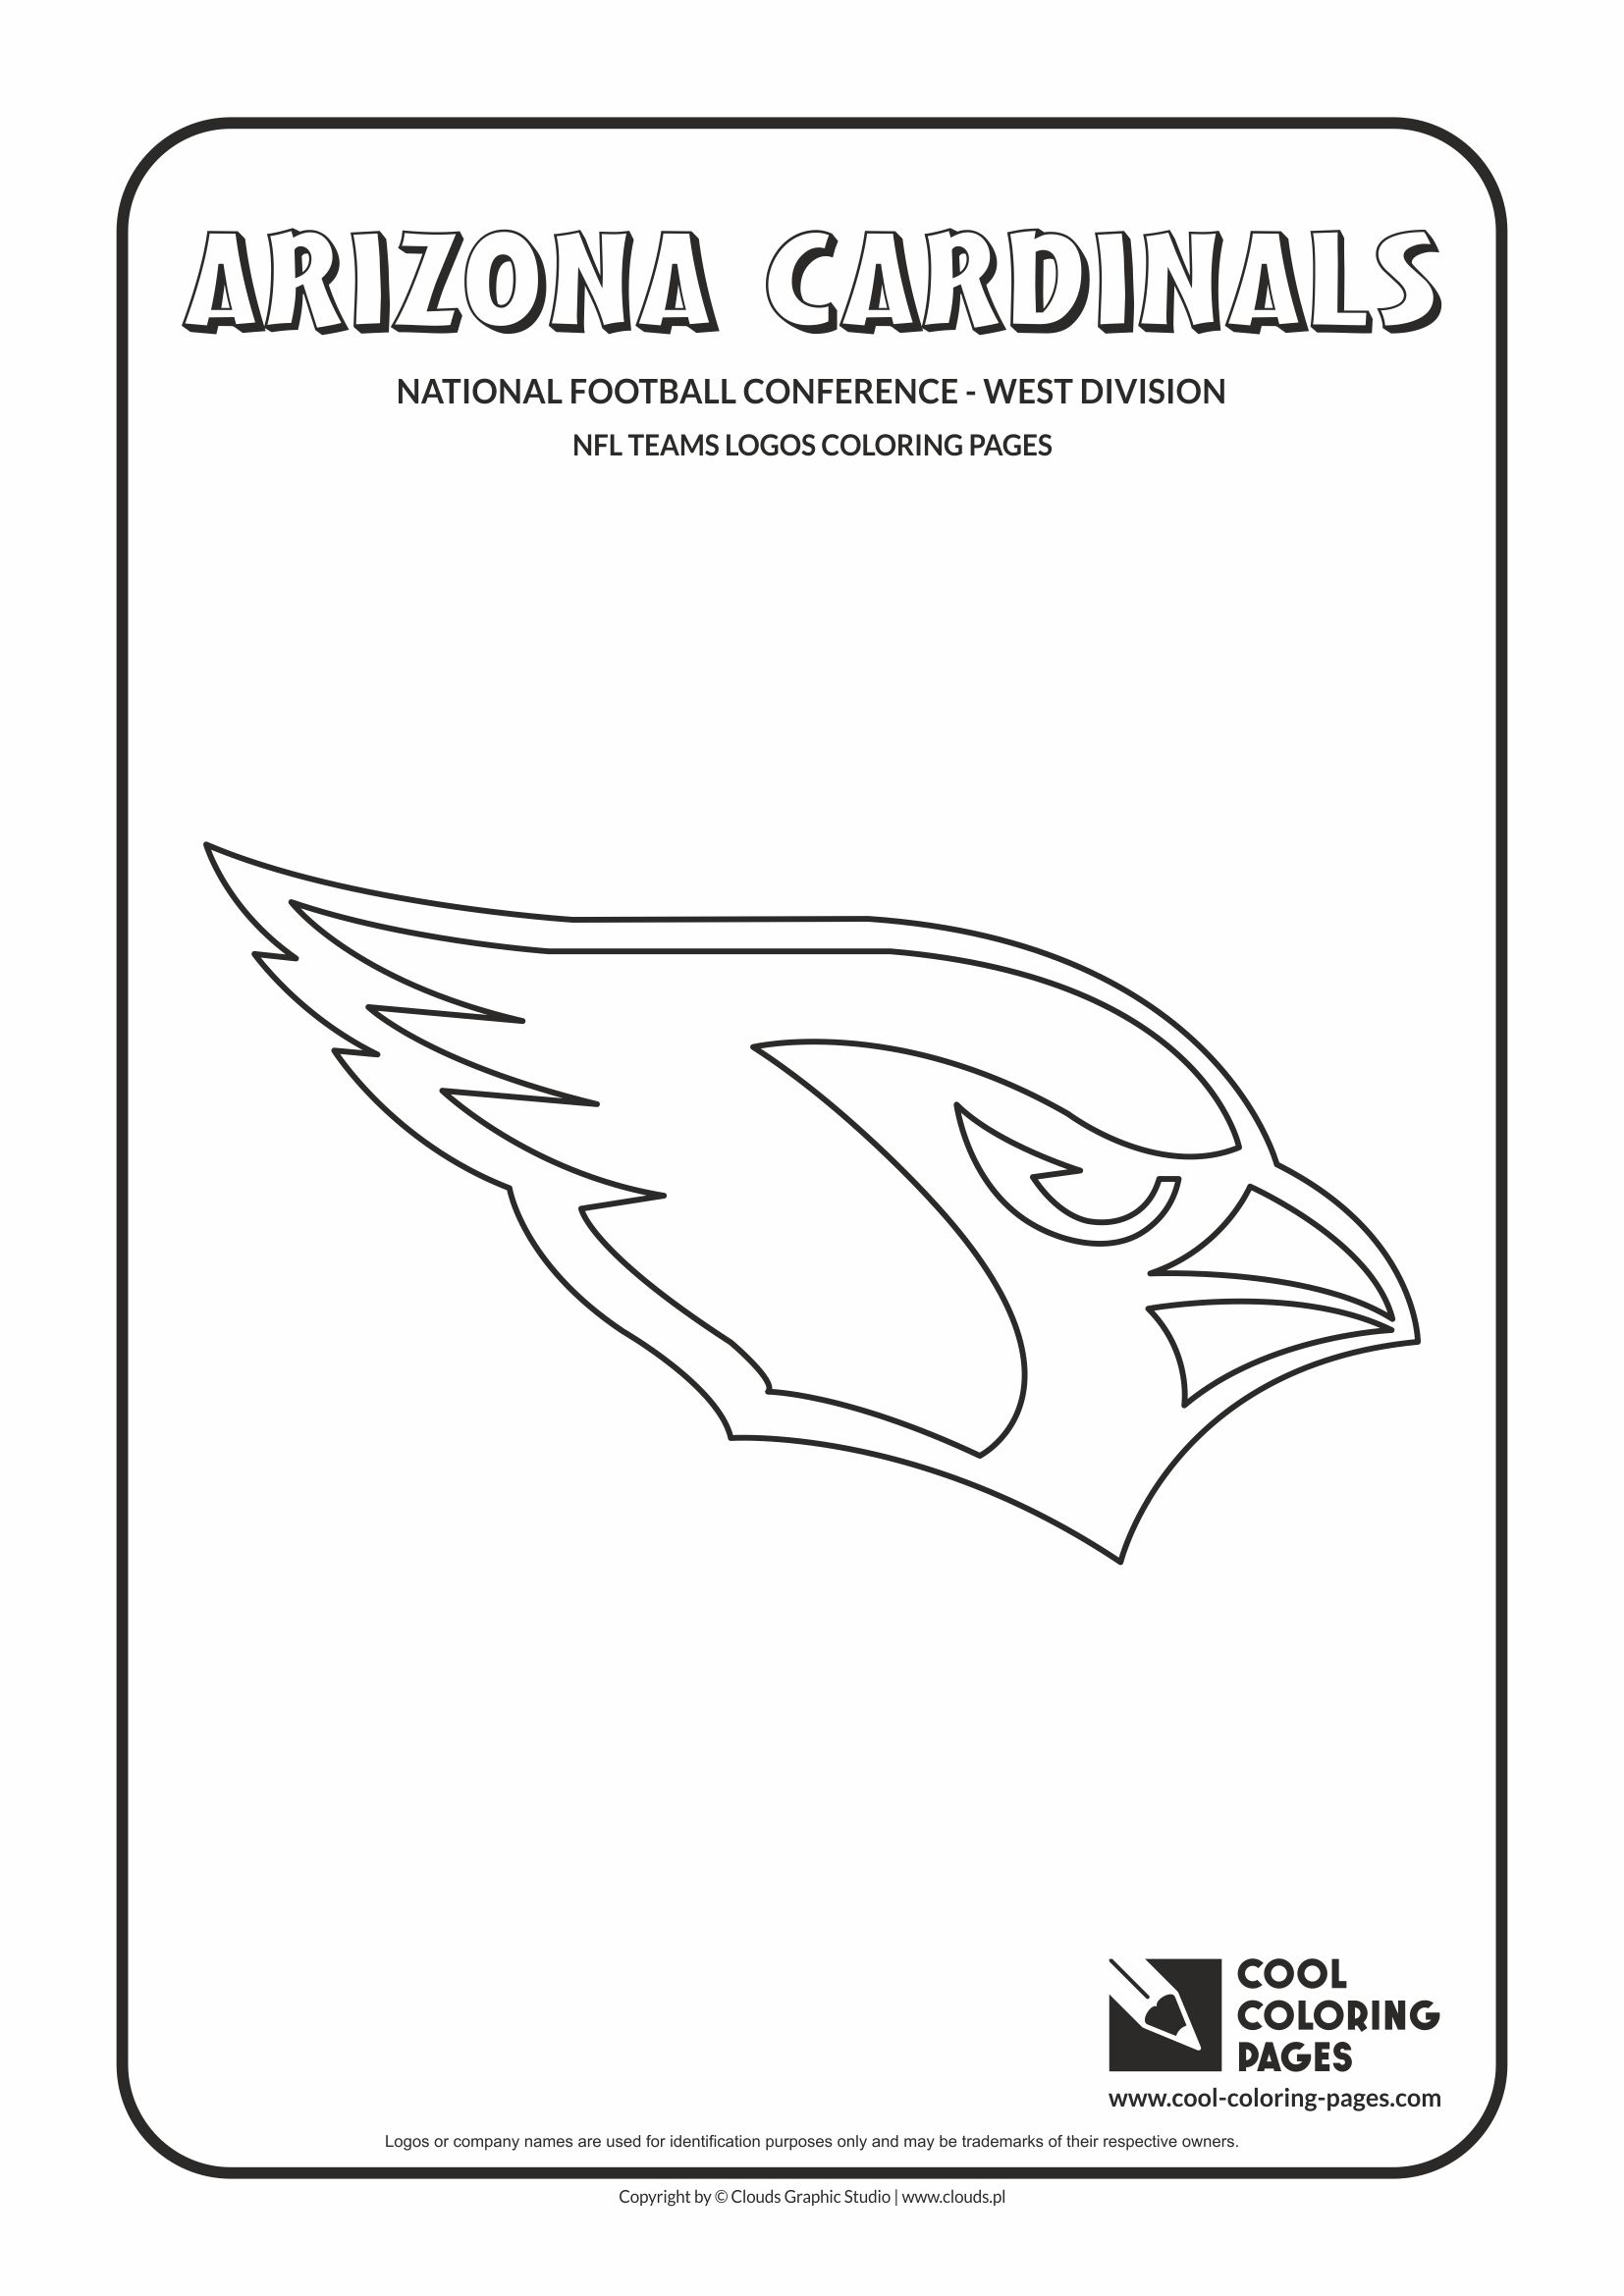 Arizona Cardinals Home Uniform - National Football League (NFL) - Chris  Creamer's Sports Logos Page 